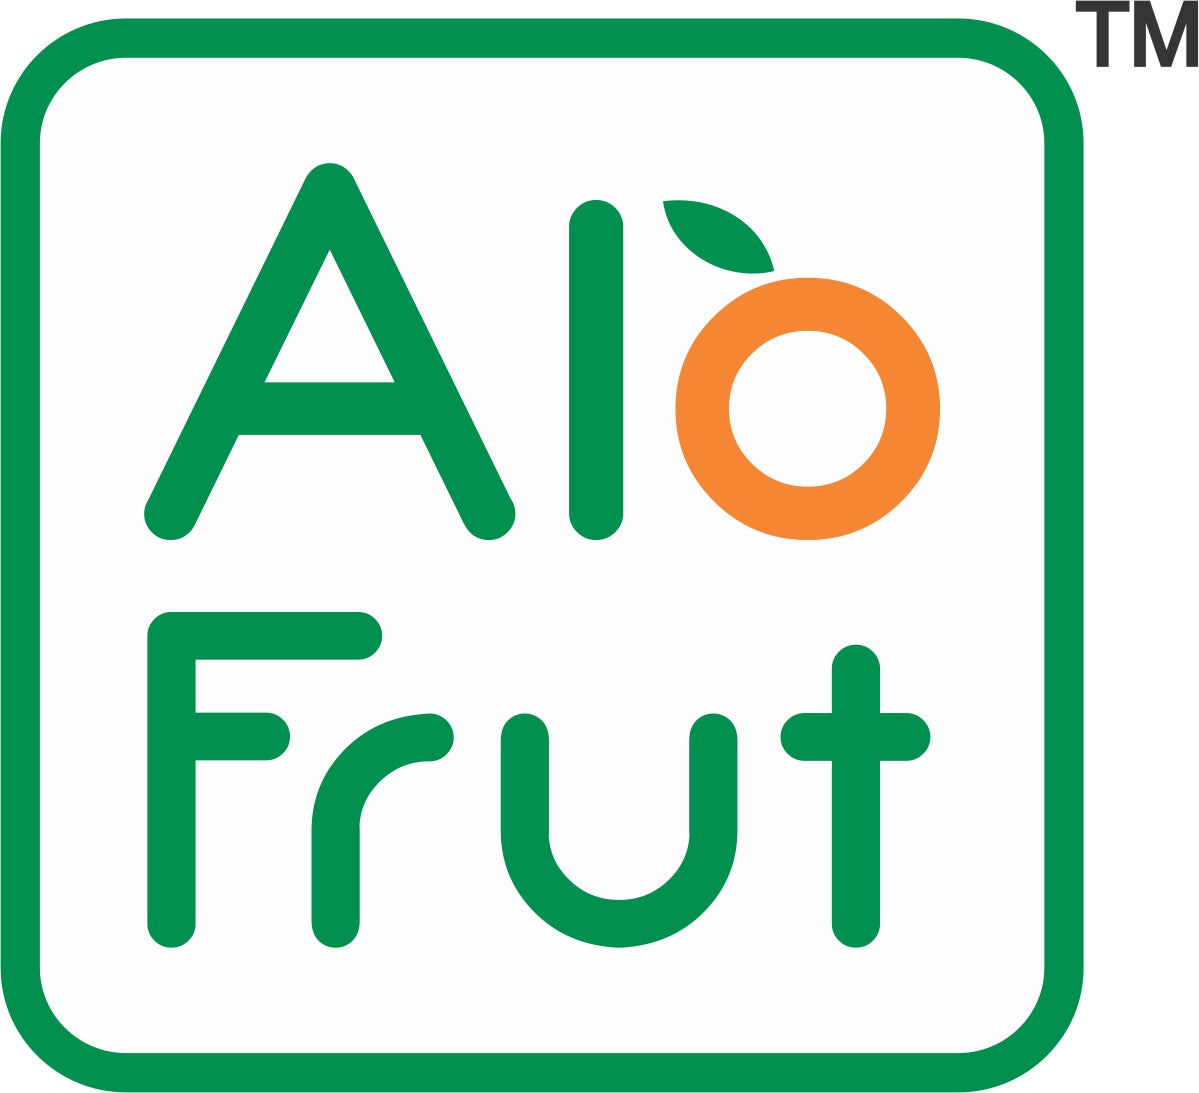 Alo Frut Kiwi Aloevera Chunks & Juice